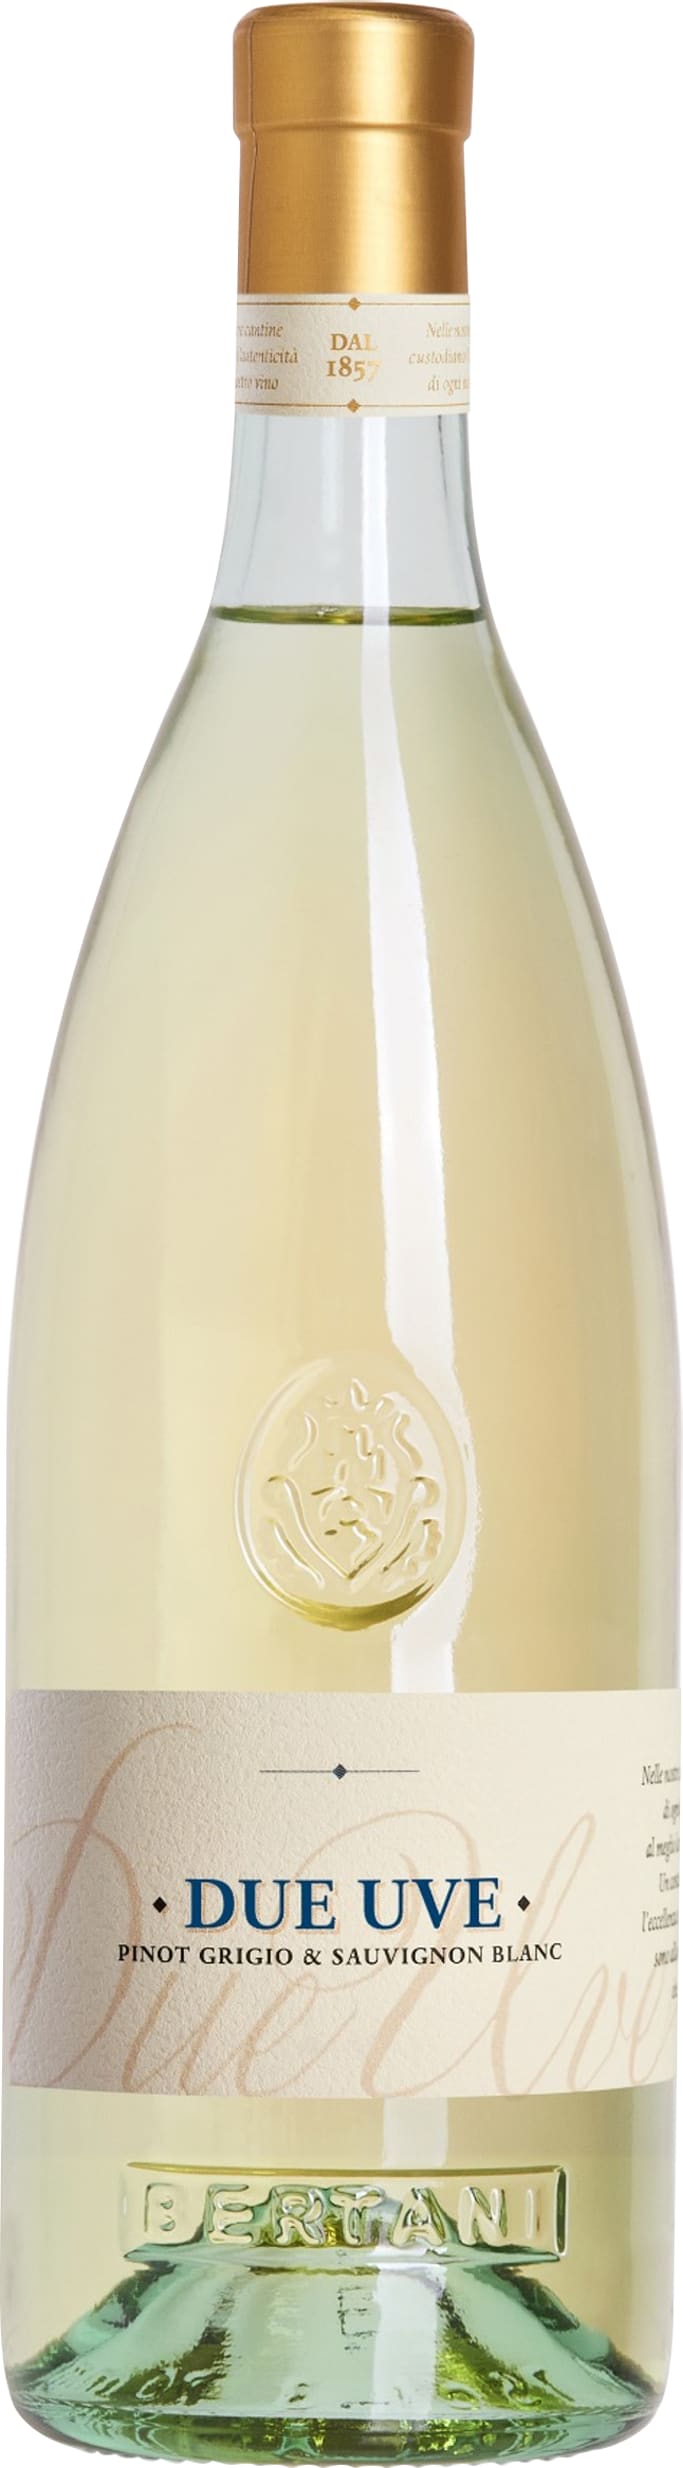 Bertani Due Uve Bianco Pinot Grigio-Sauvignon 2022 75cl - Buy Bertani Wines from GREAT WINES DIRECT wine shop